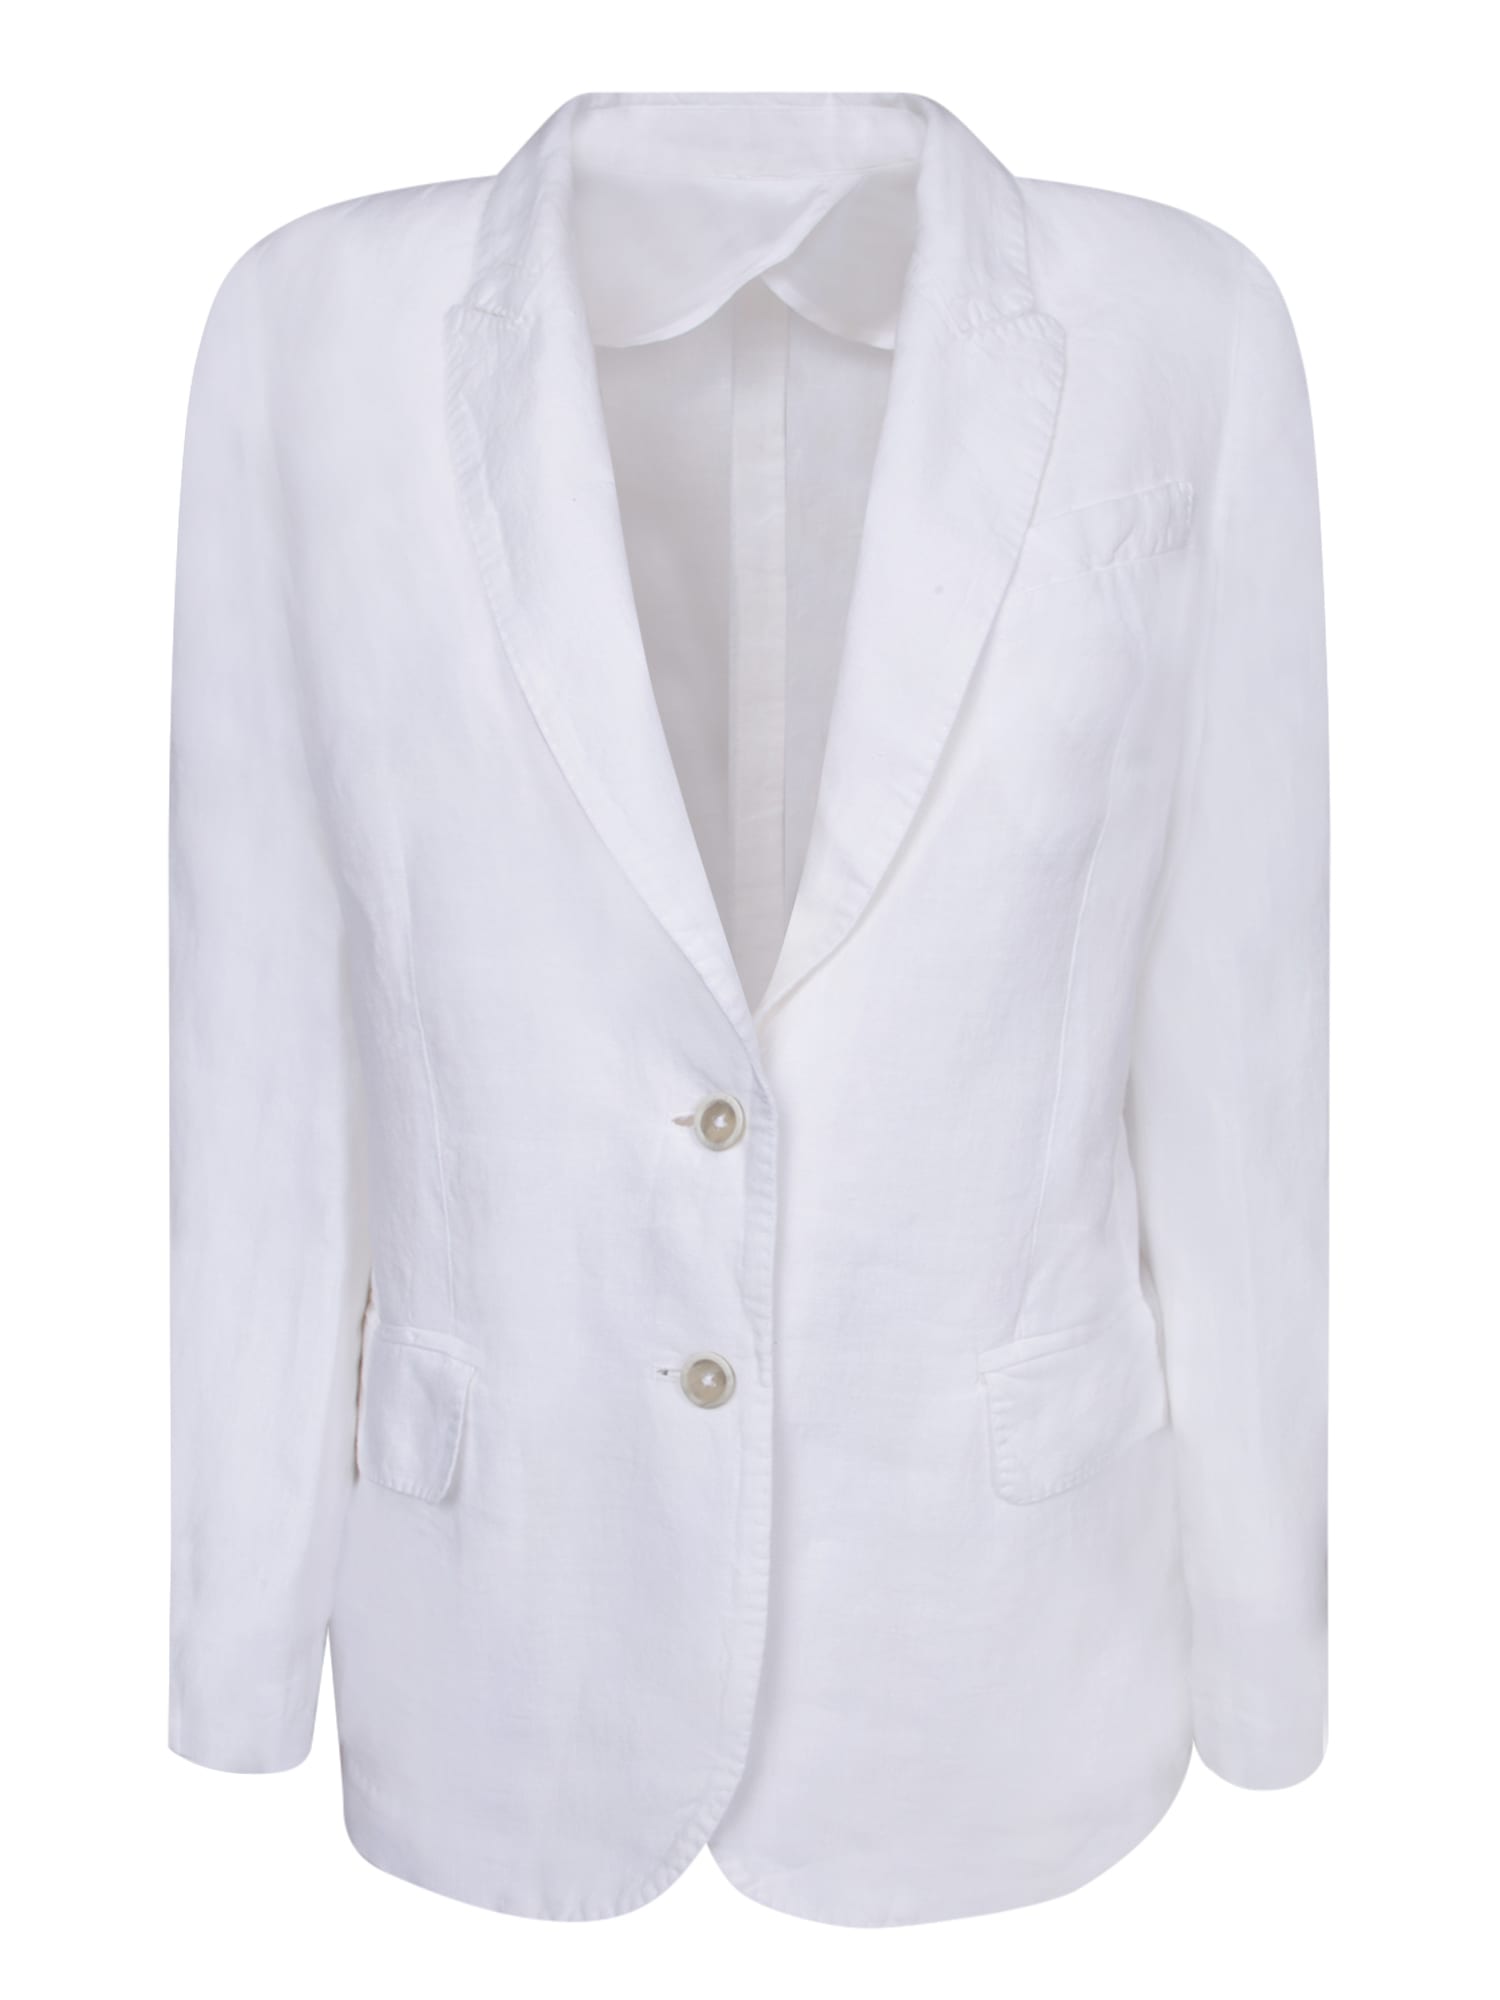 White Linen Jacket